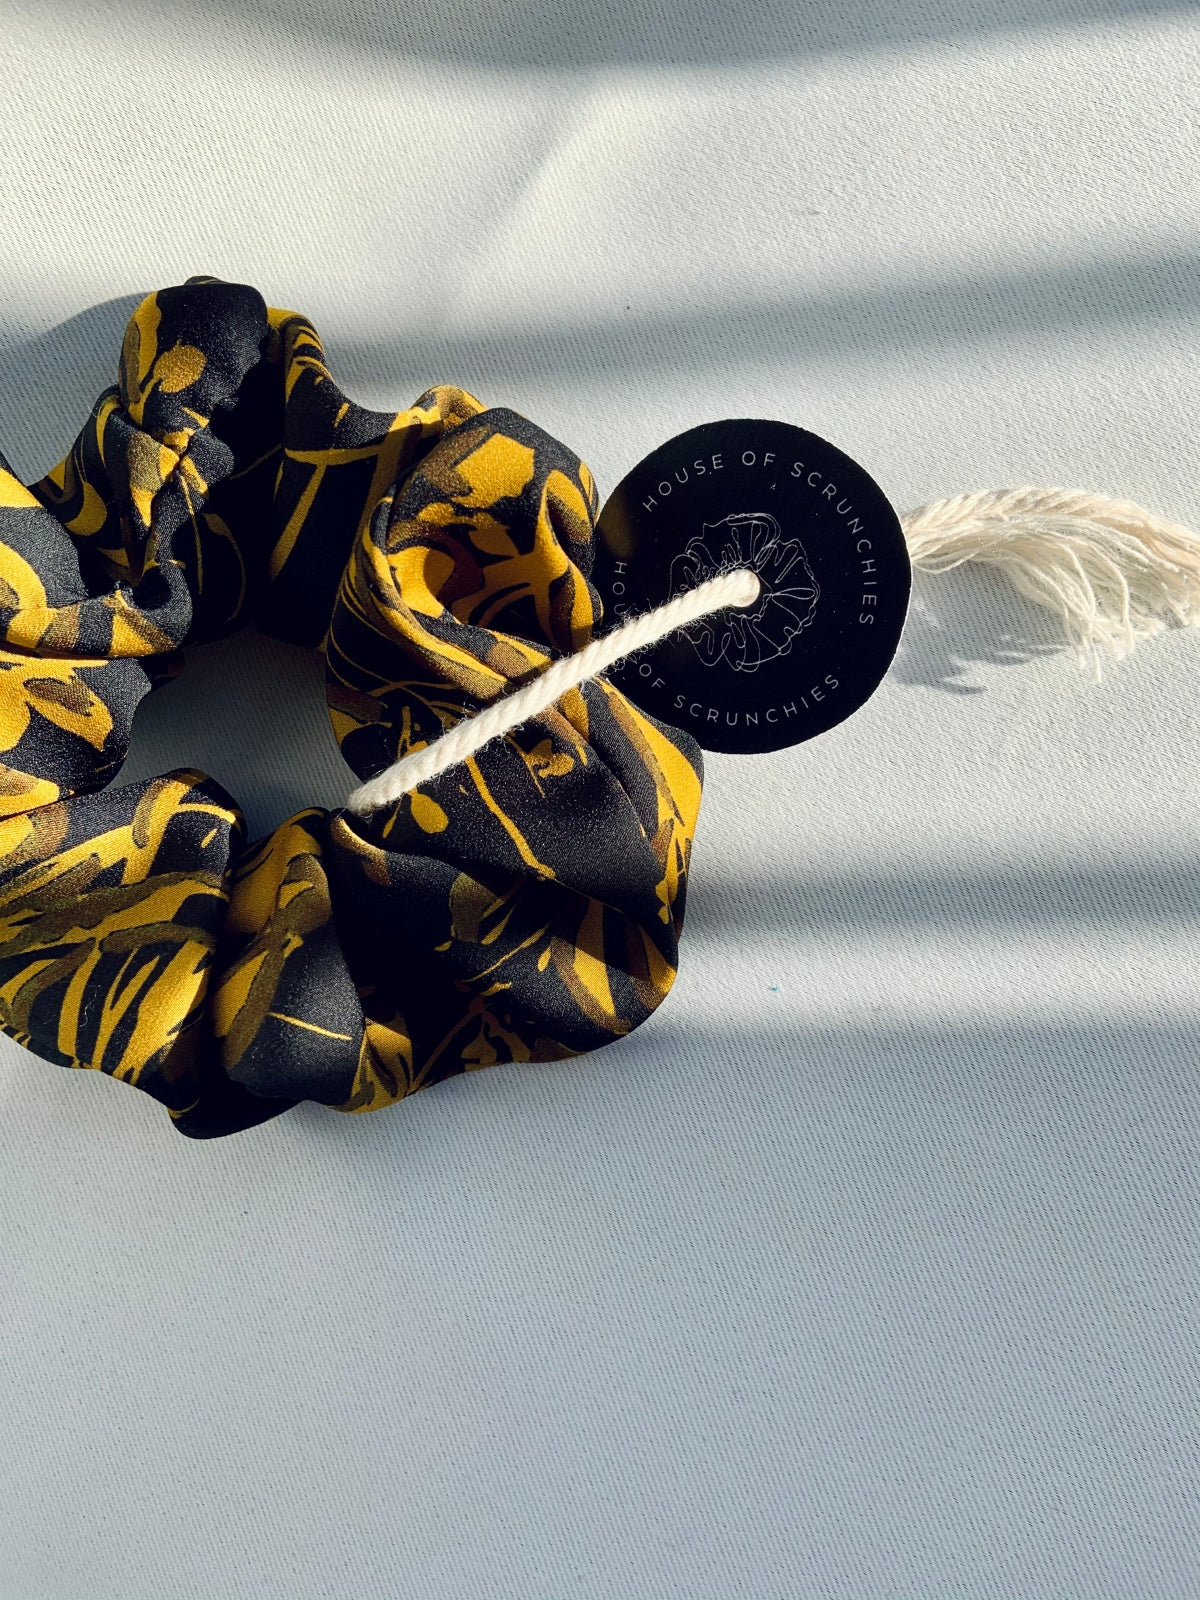 Scrunchie - Black/Yellow Flowers